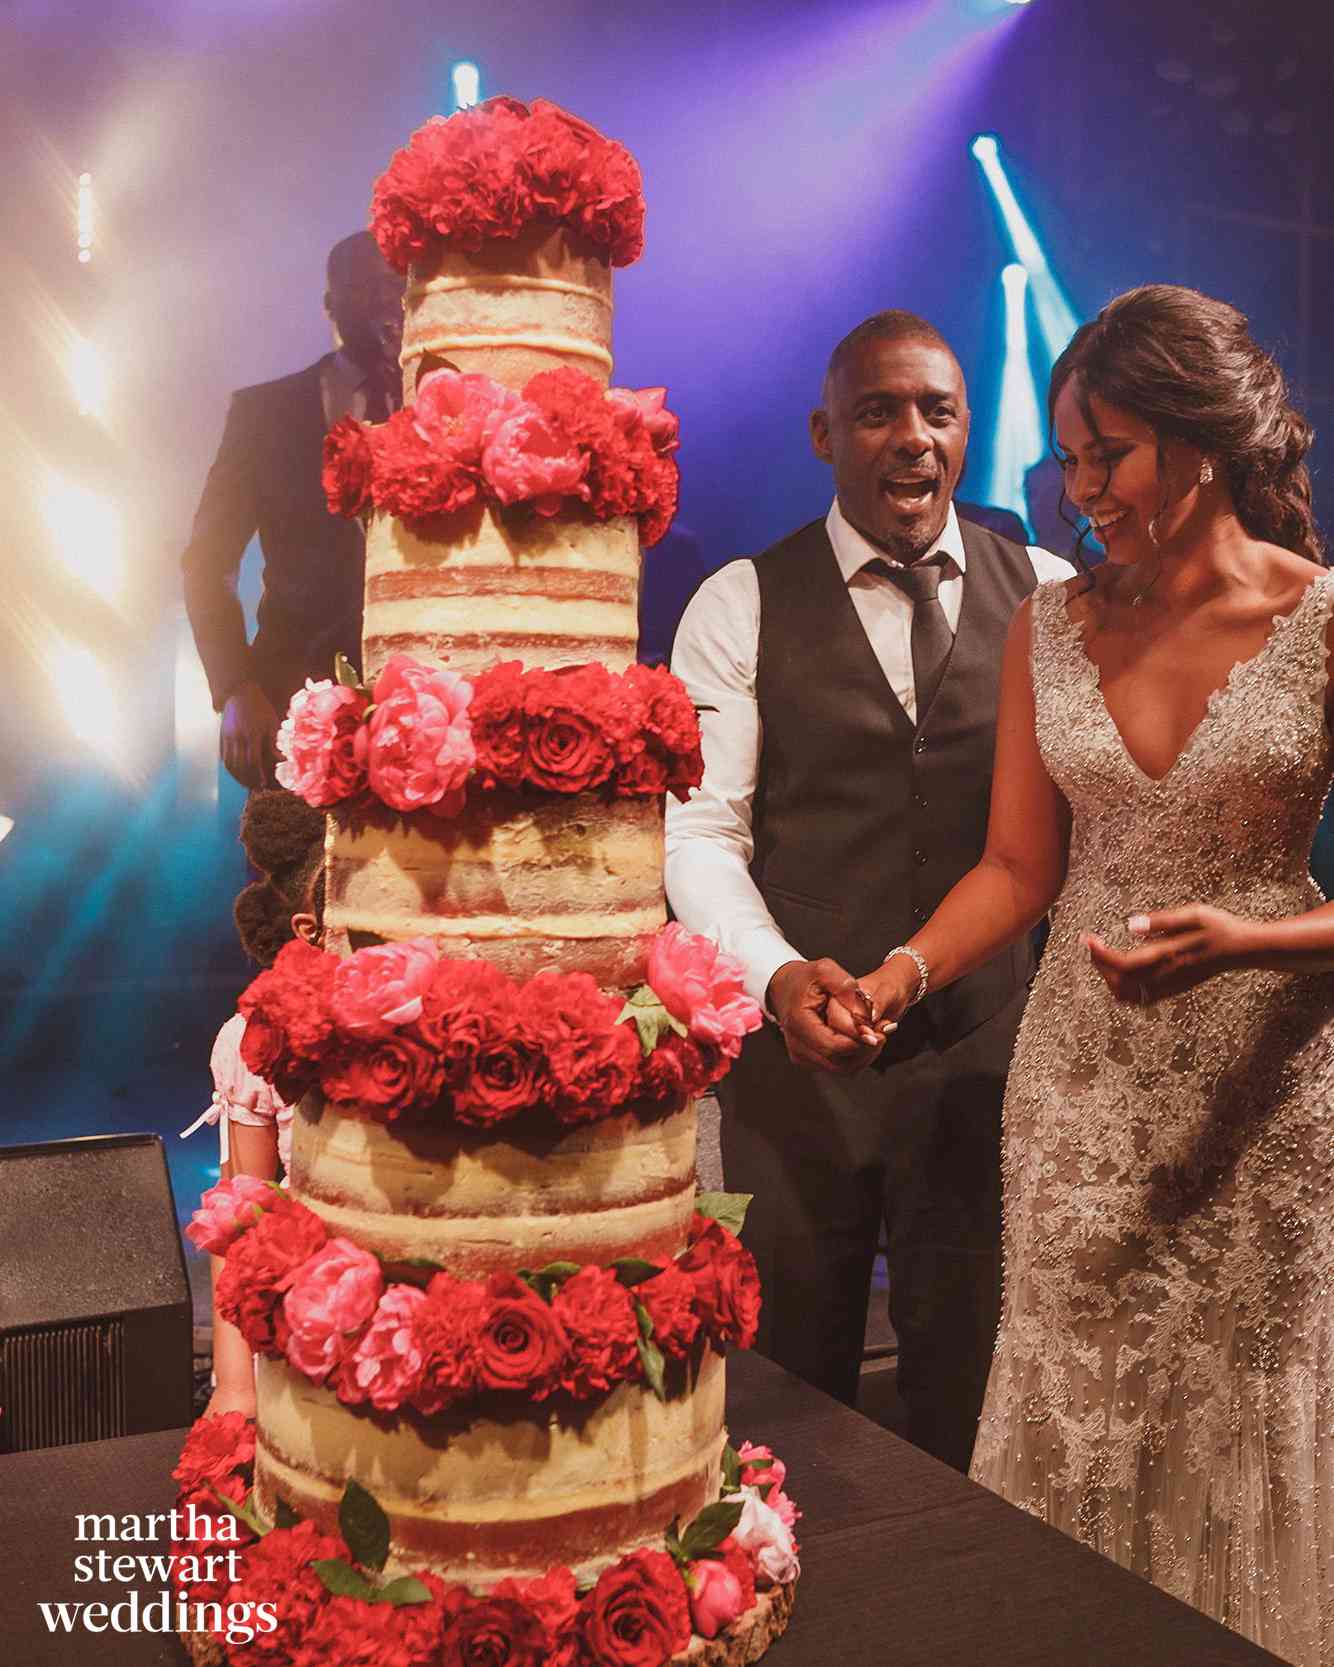 idris and sabrina elba cutting wedding cake